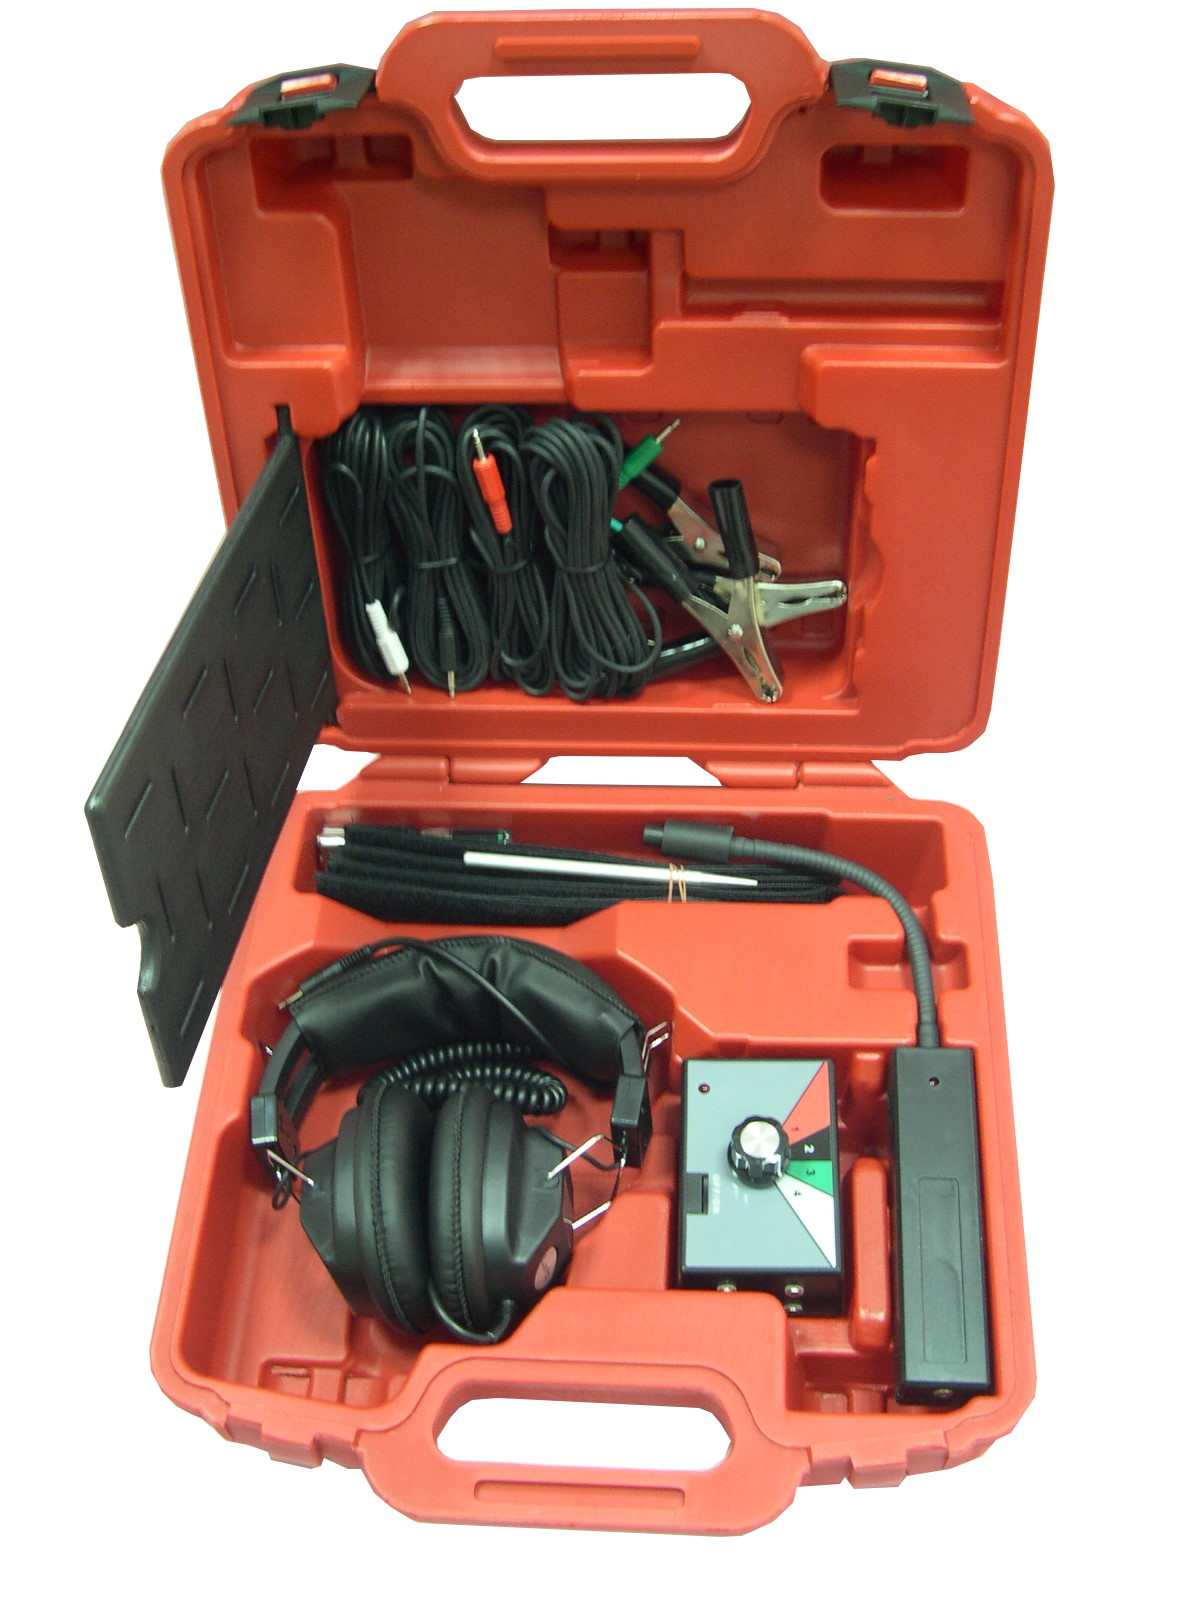 Kaufe Kfz-Mechaniker-Stethoskop, Motorzylinder-Geräuschtester